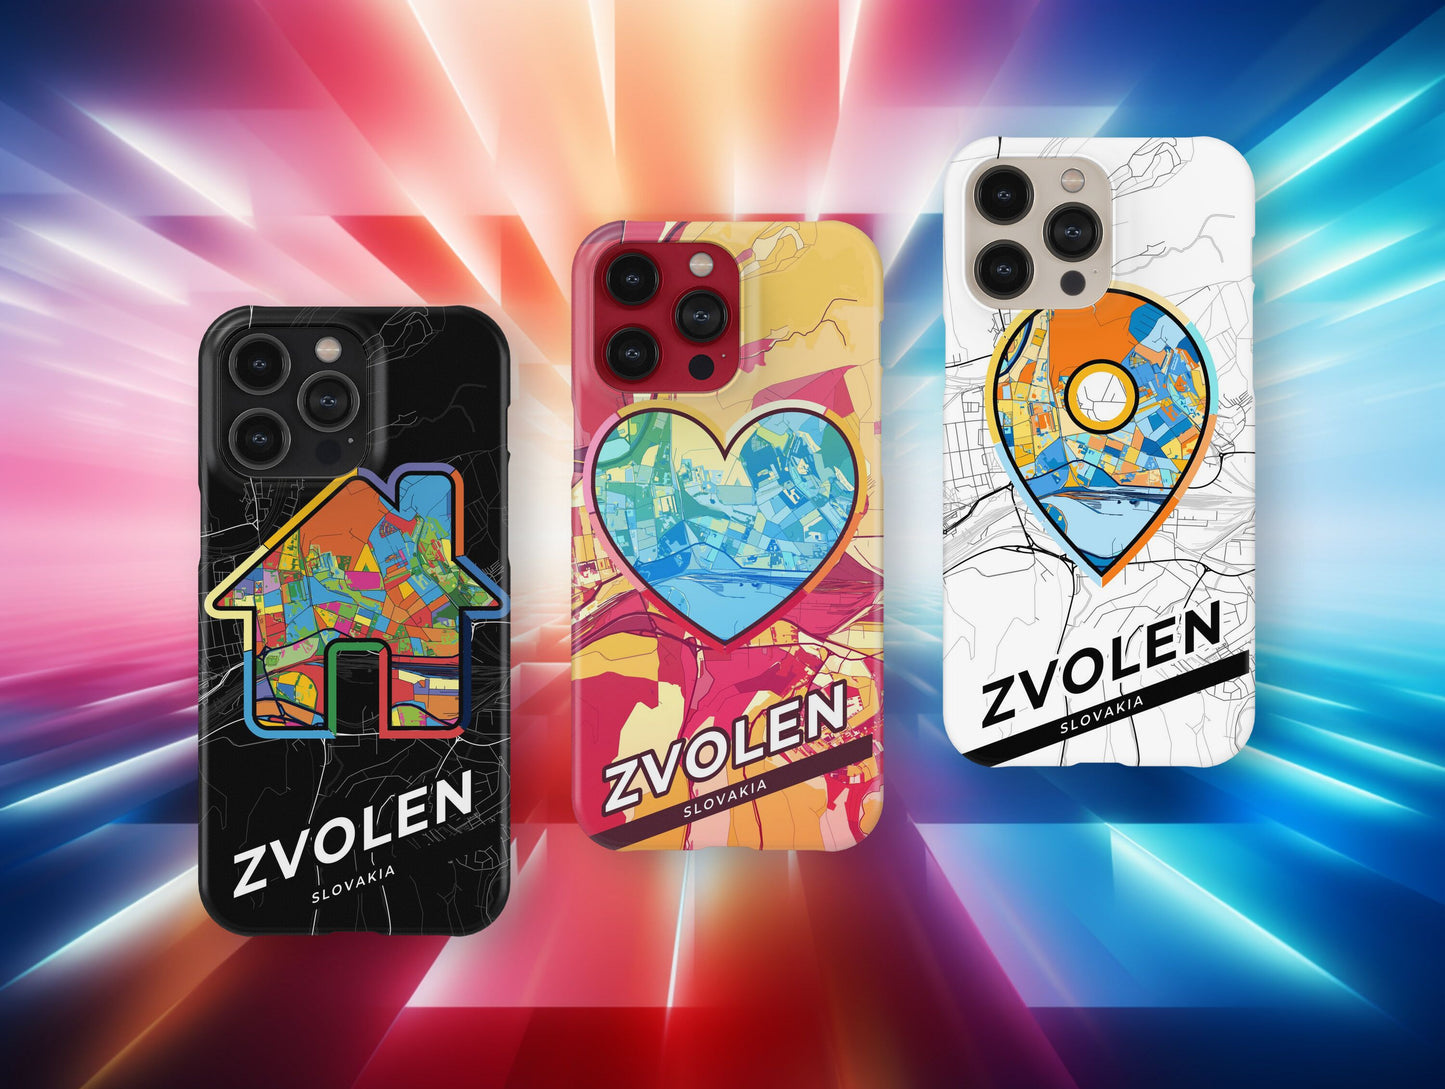 Zvolen Slovakia slim phone case with colorful icon